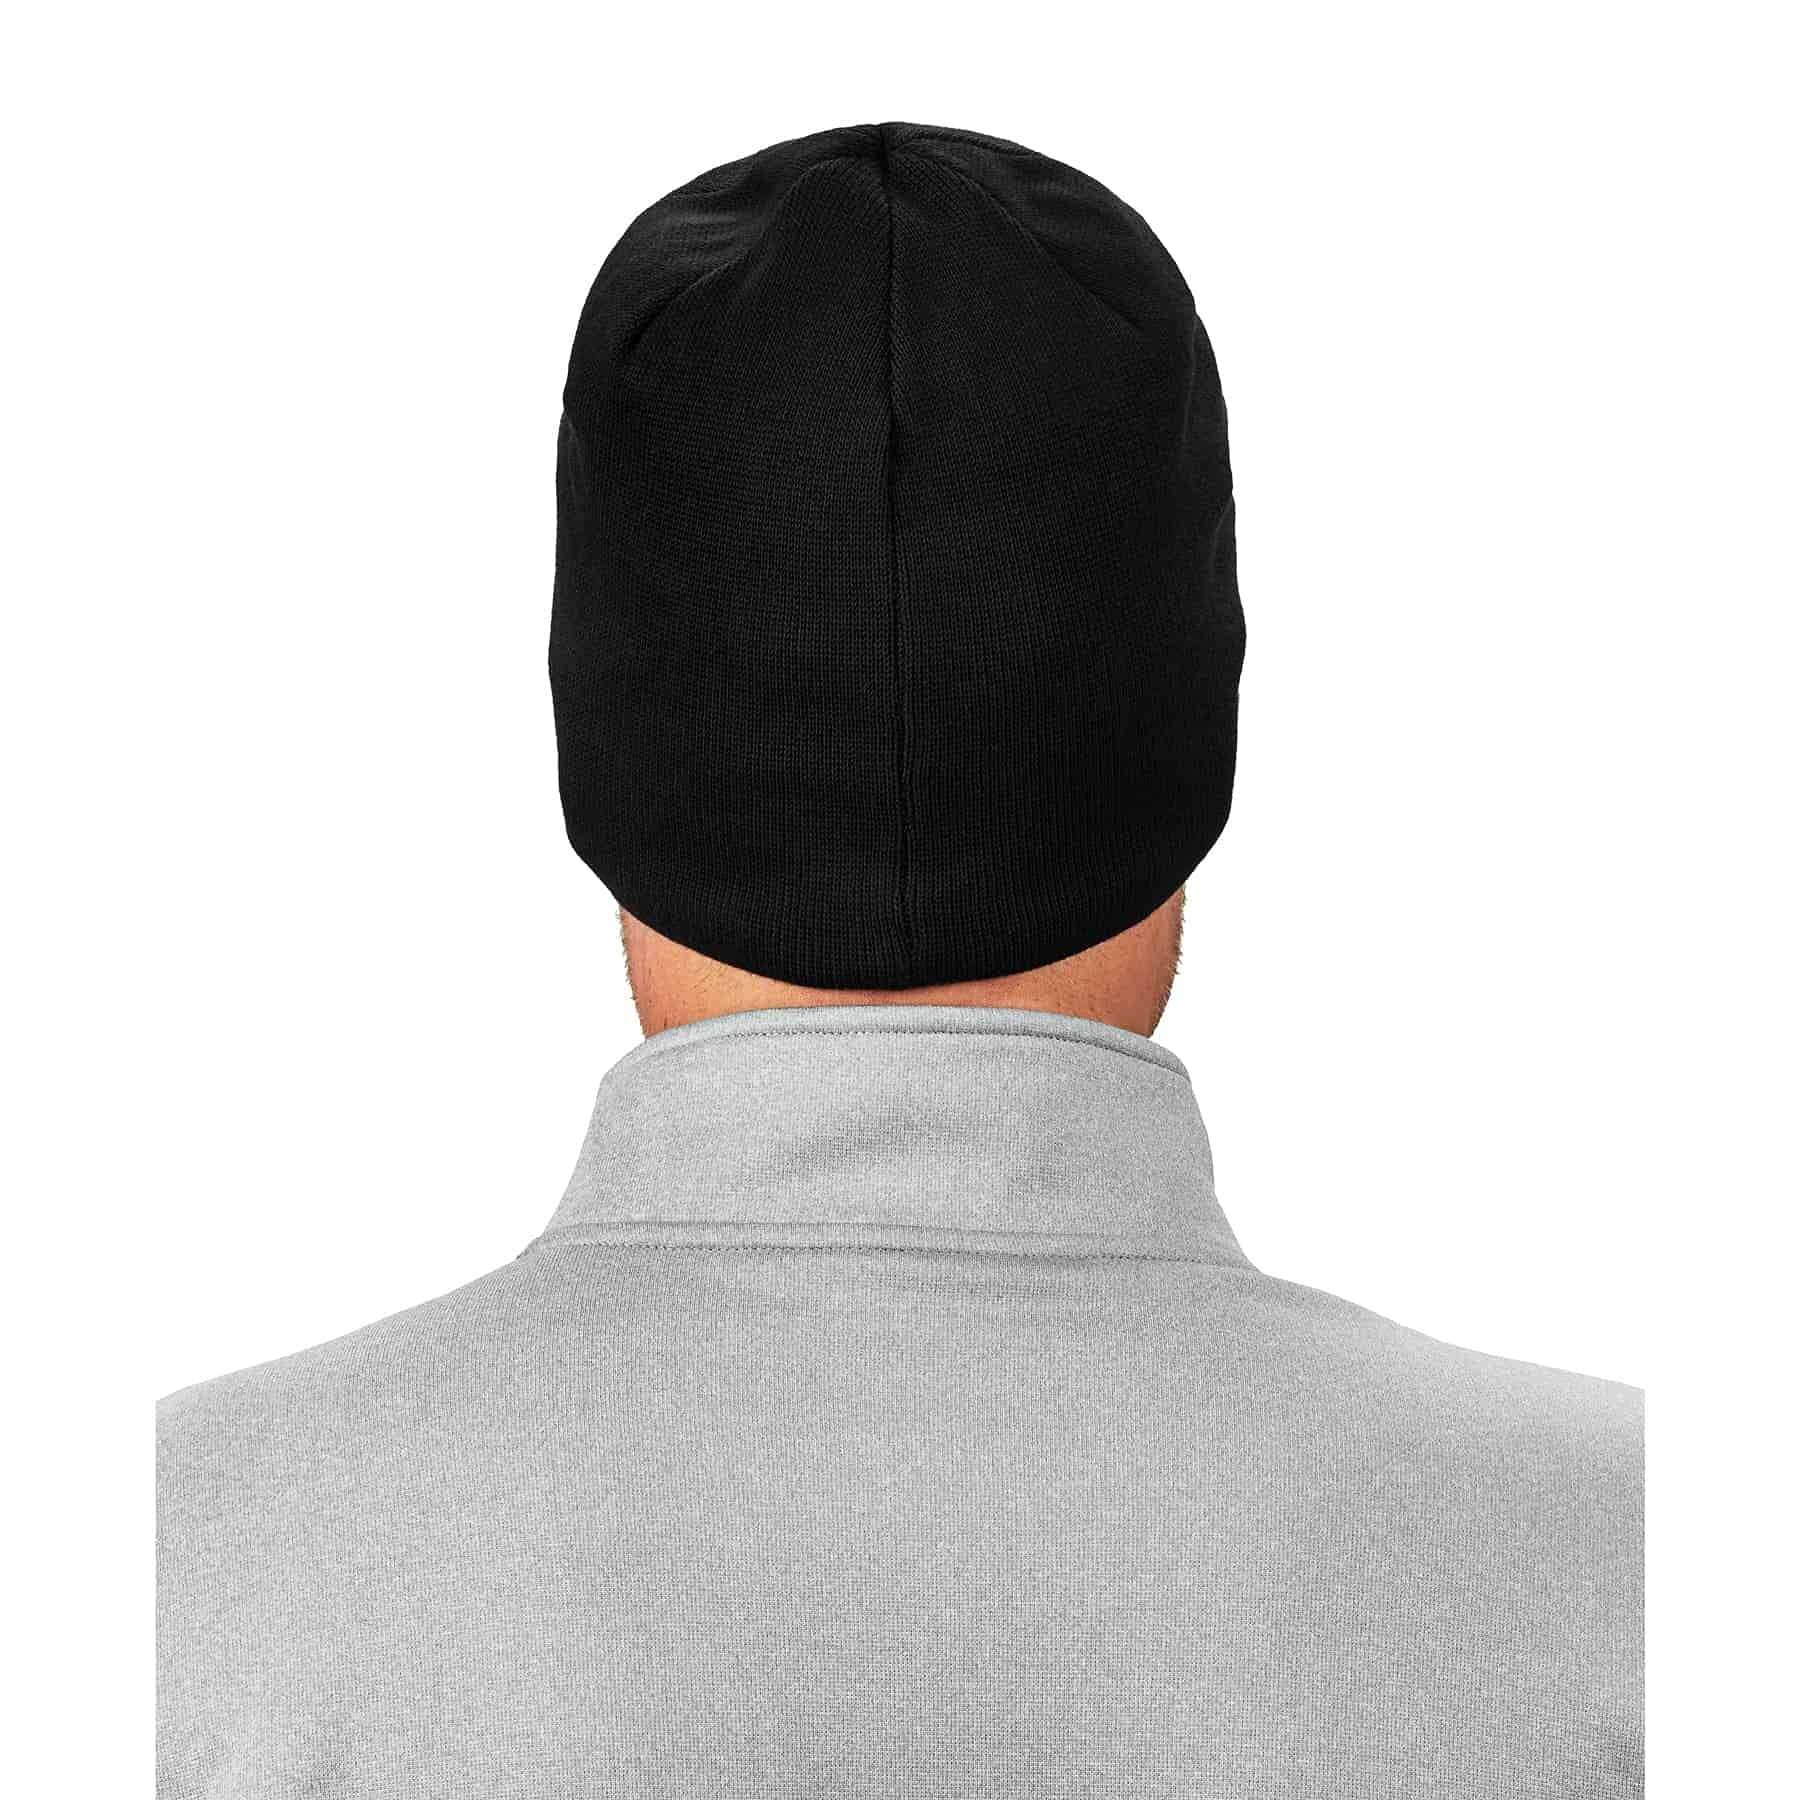 Ergodyne N-Ferno 6816 Thermal Reversible Knit Beanie Hat